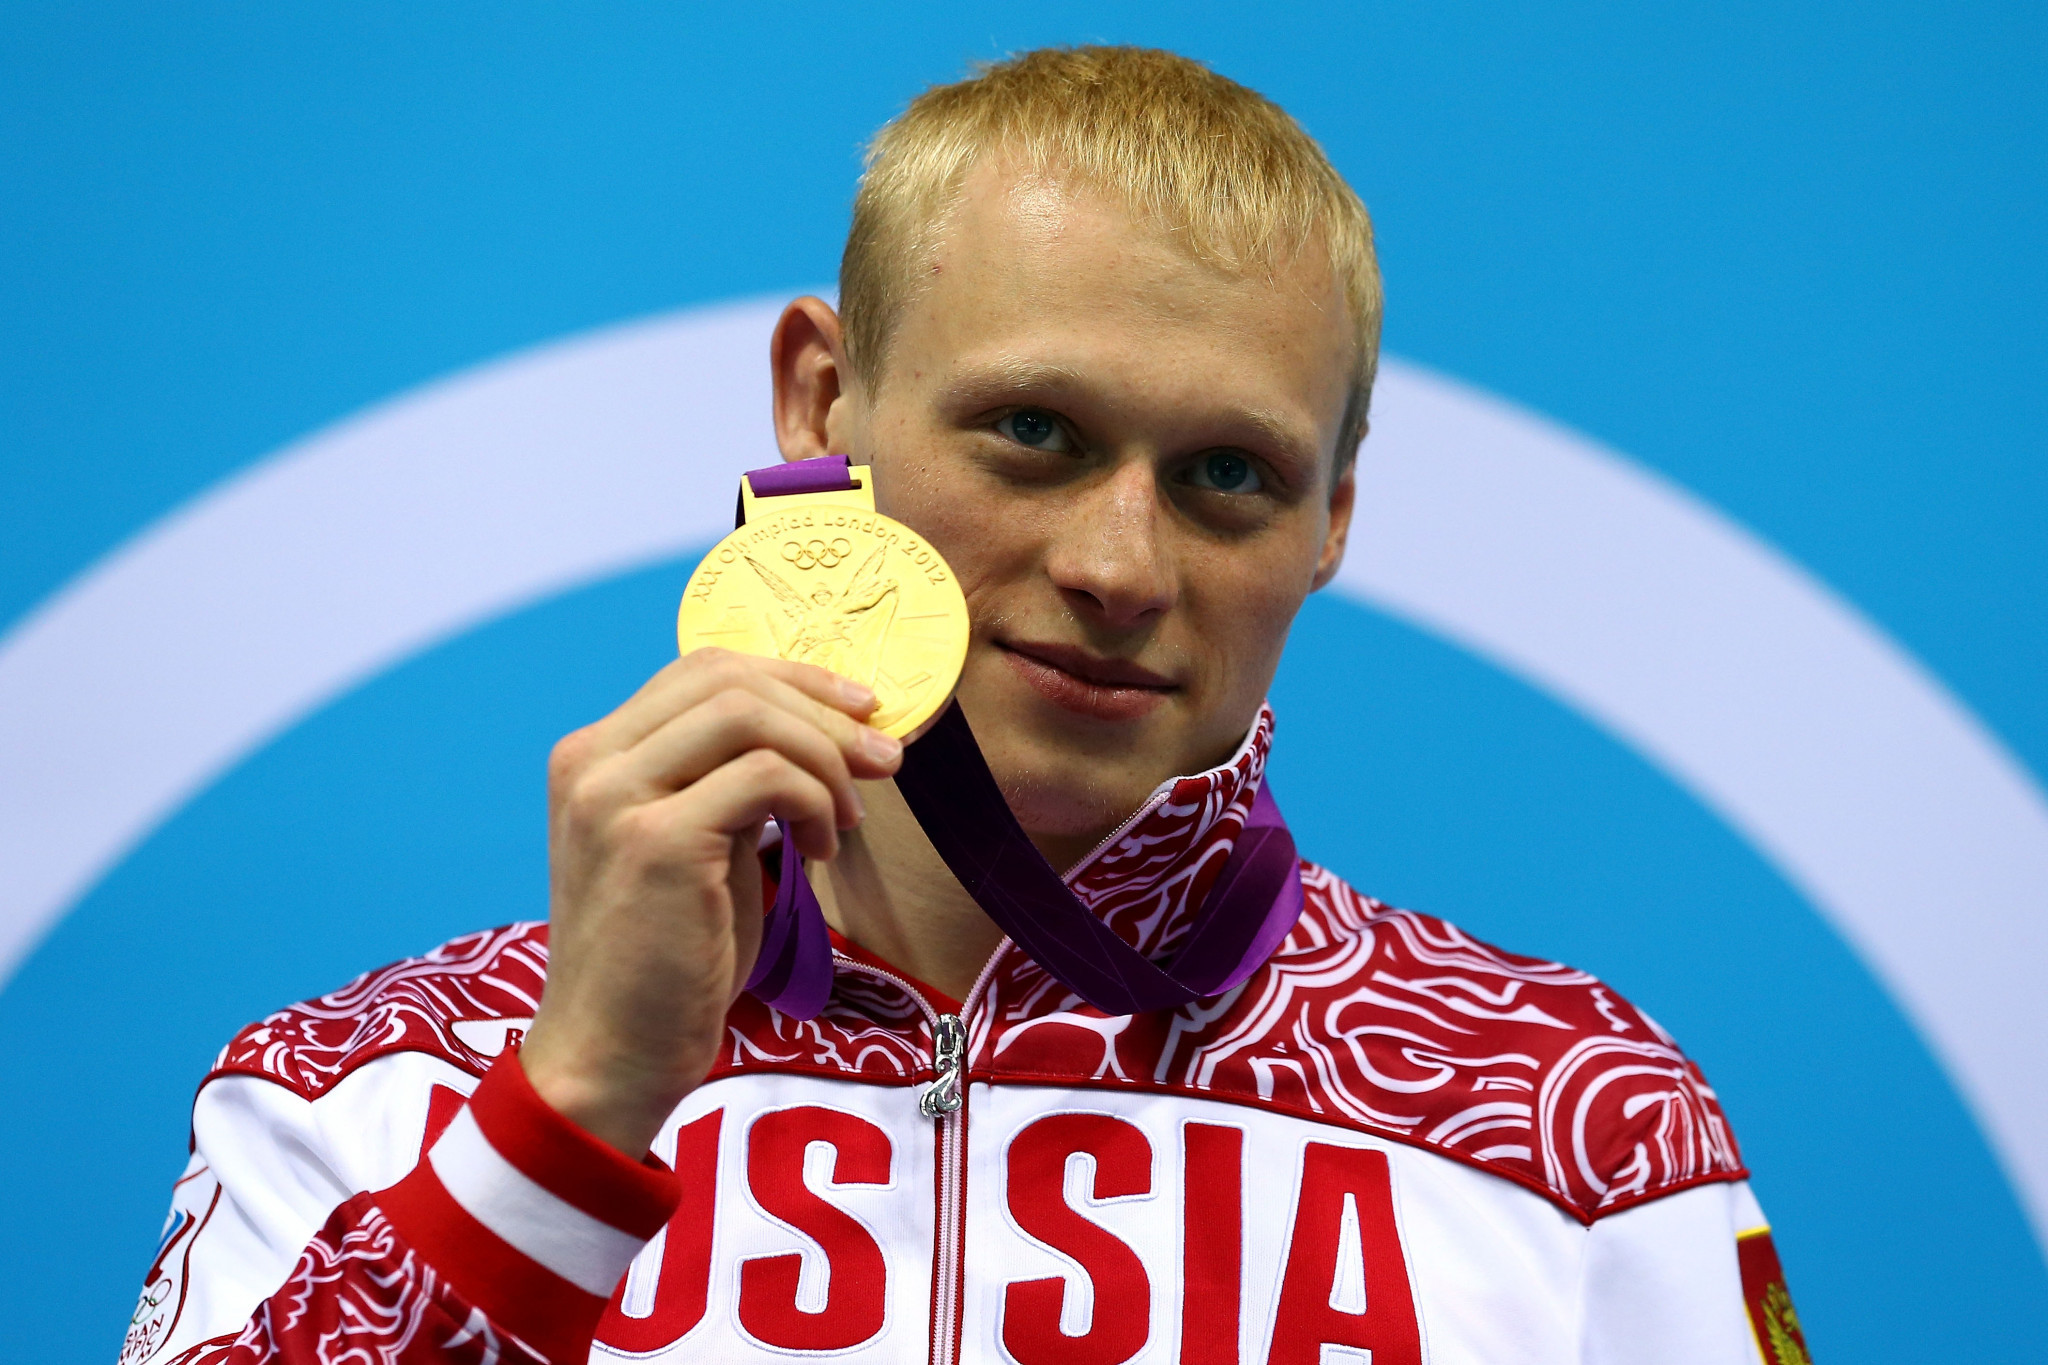 Russian Olympic diver Zakharov announces retirement